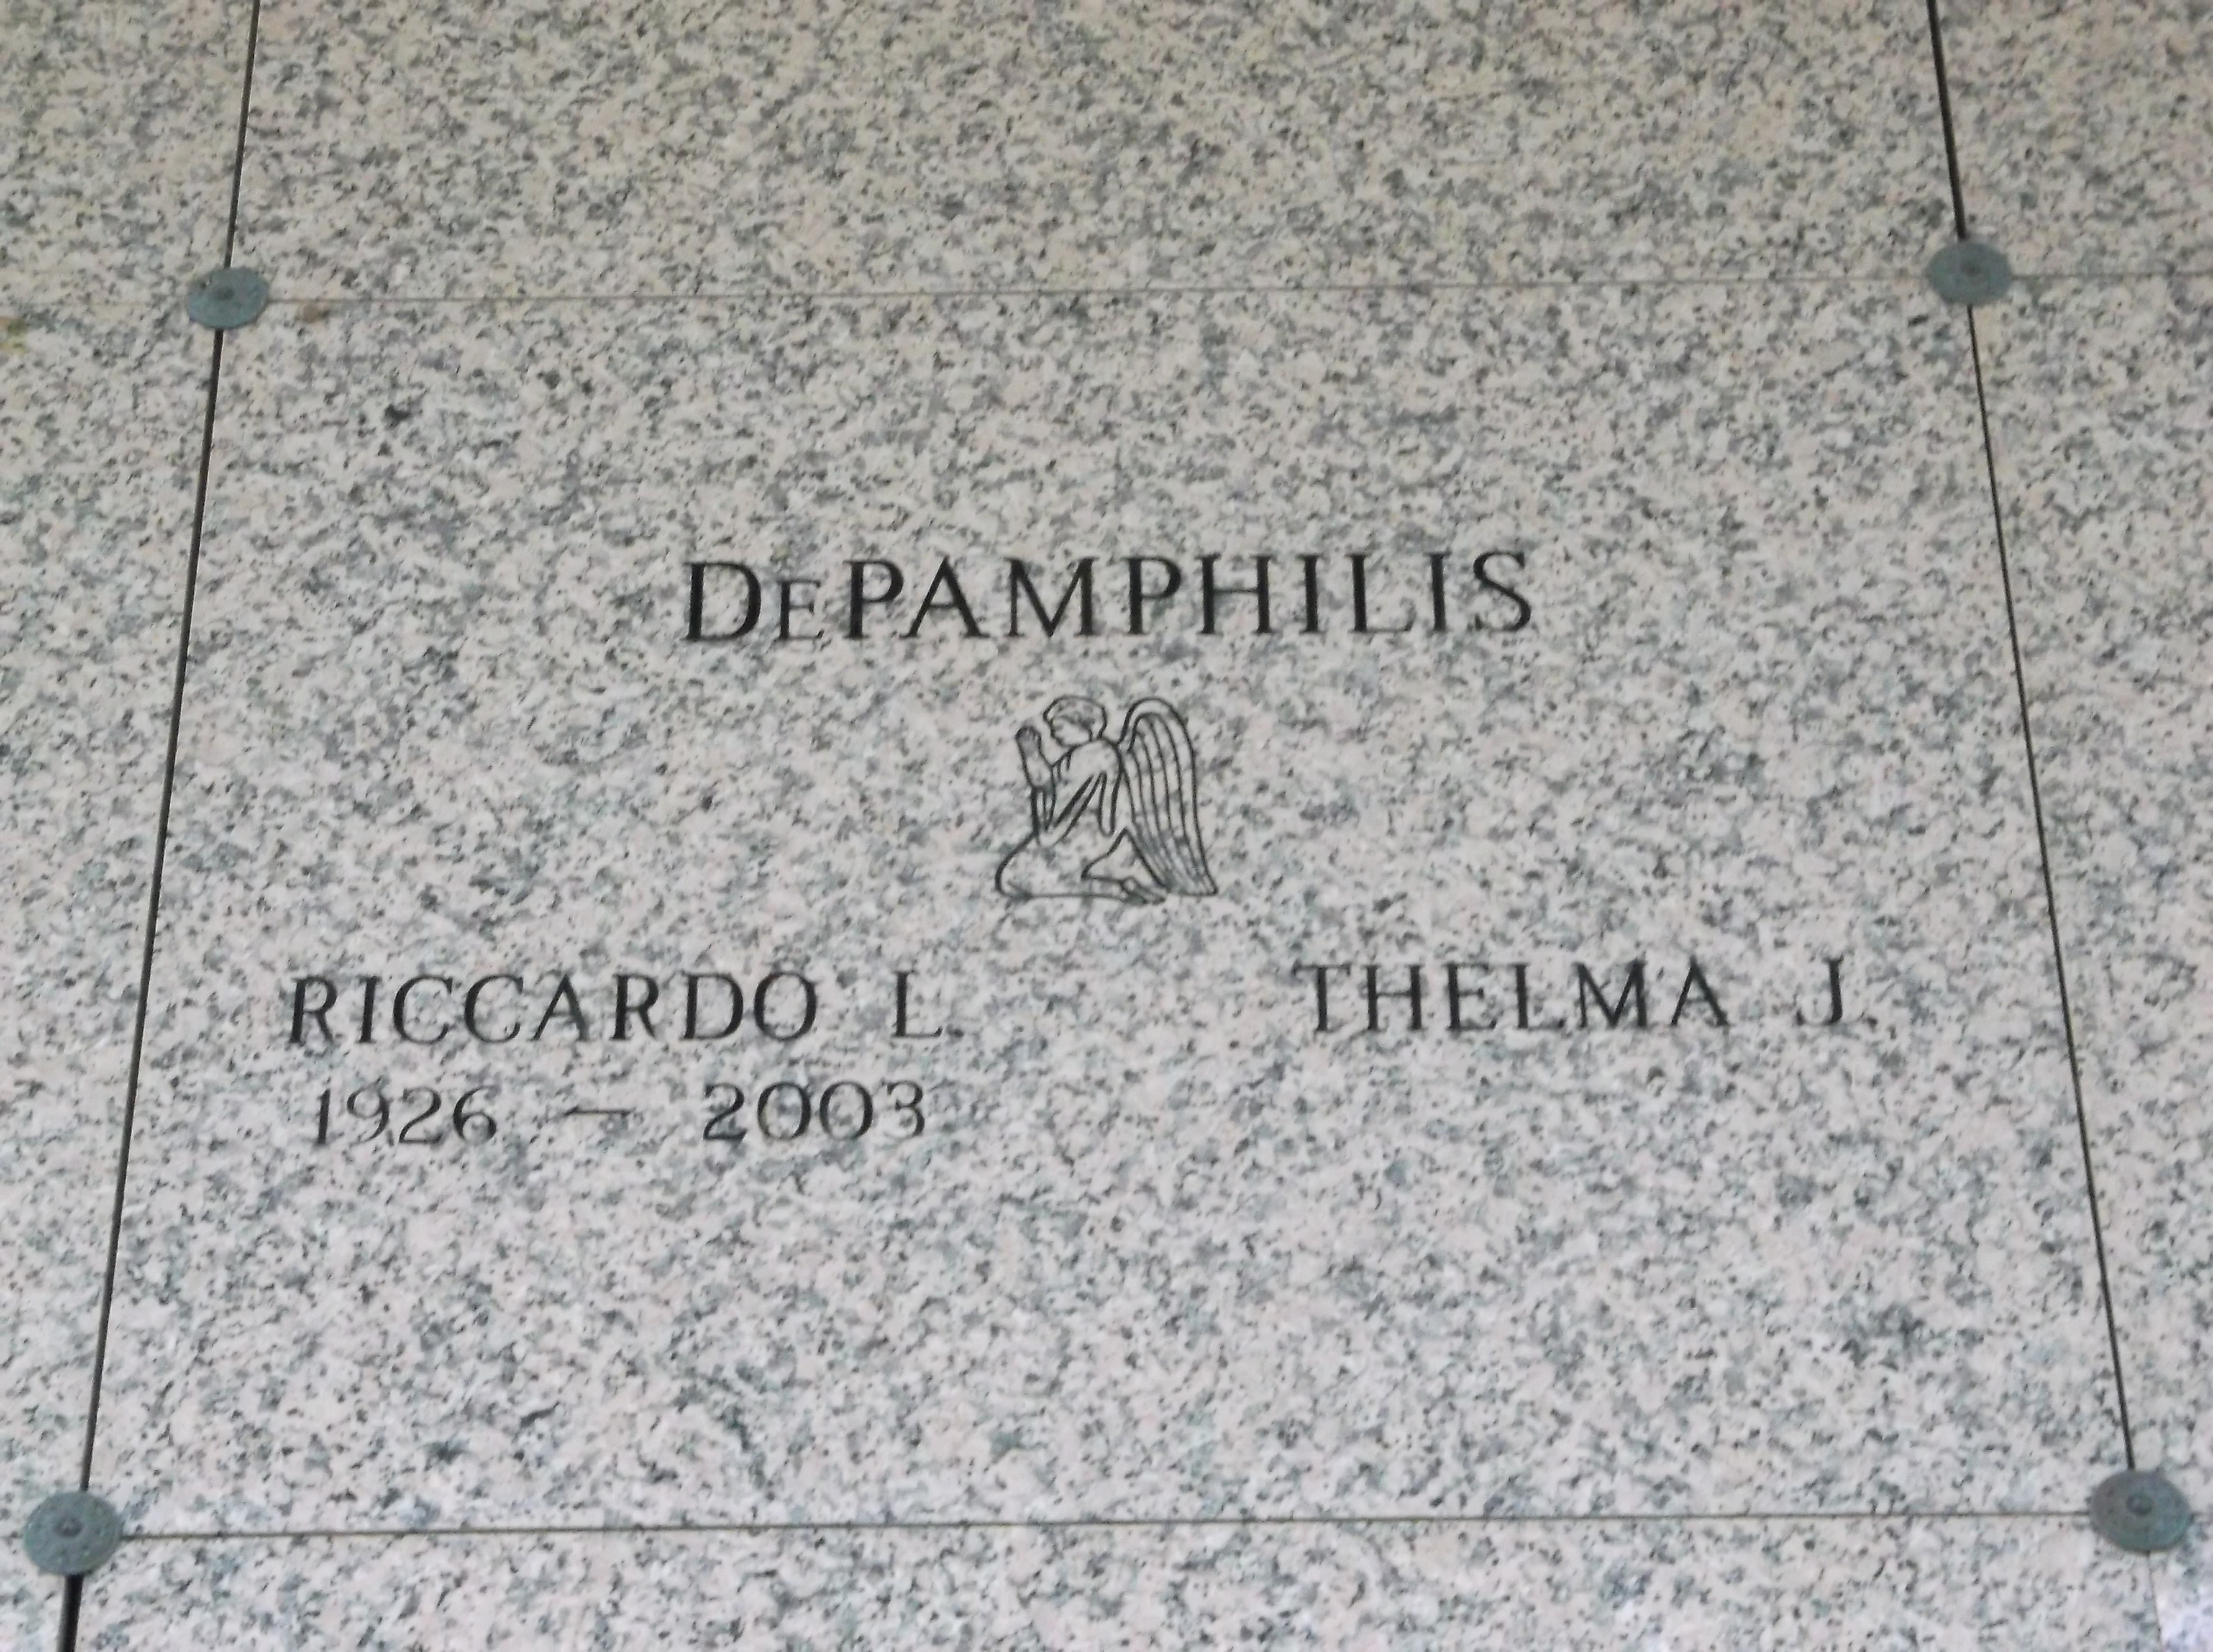 Thelma J DePamphilis